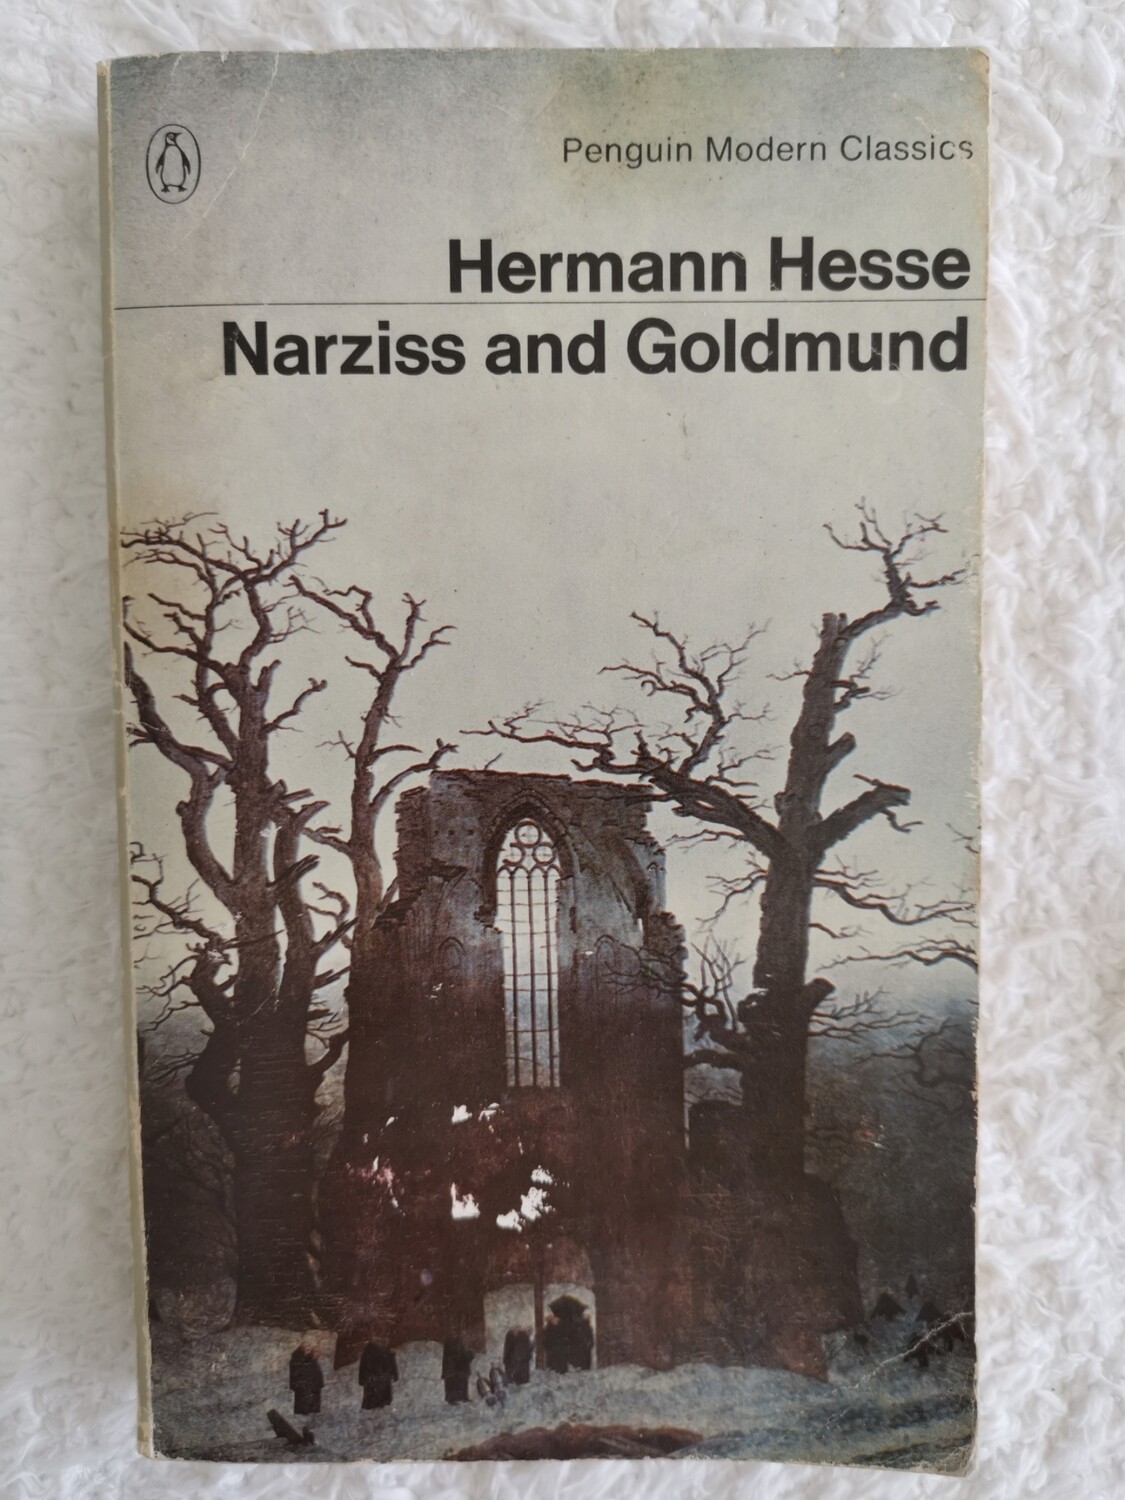 Narziss and Goldmund, Hermann Hesse